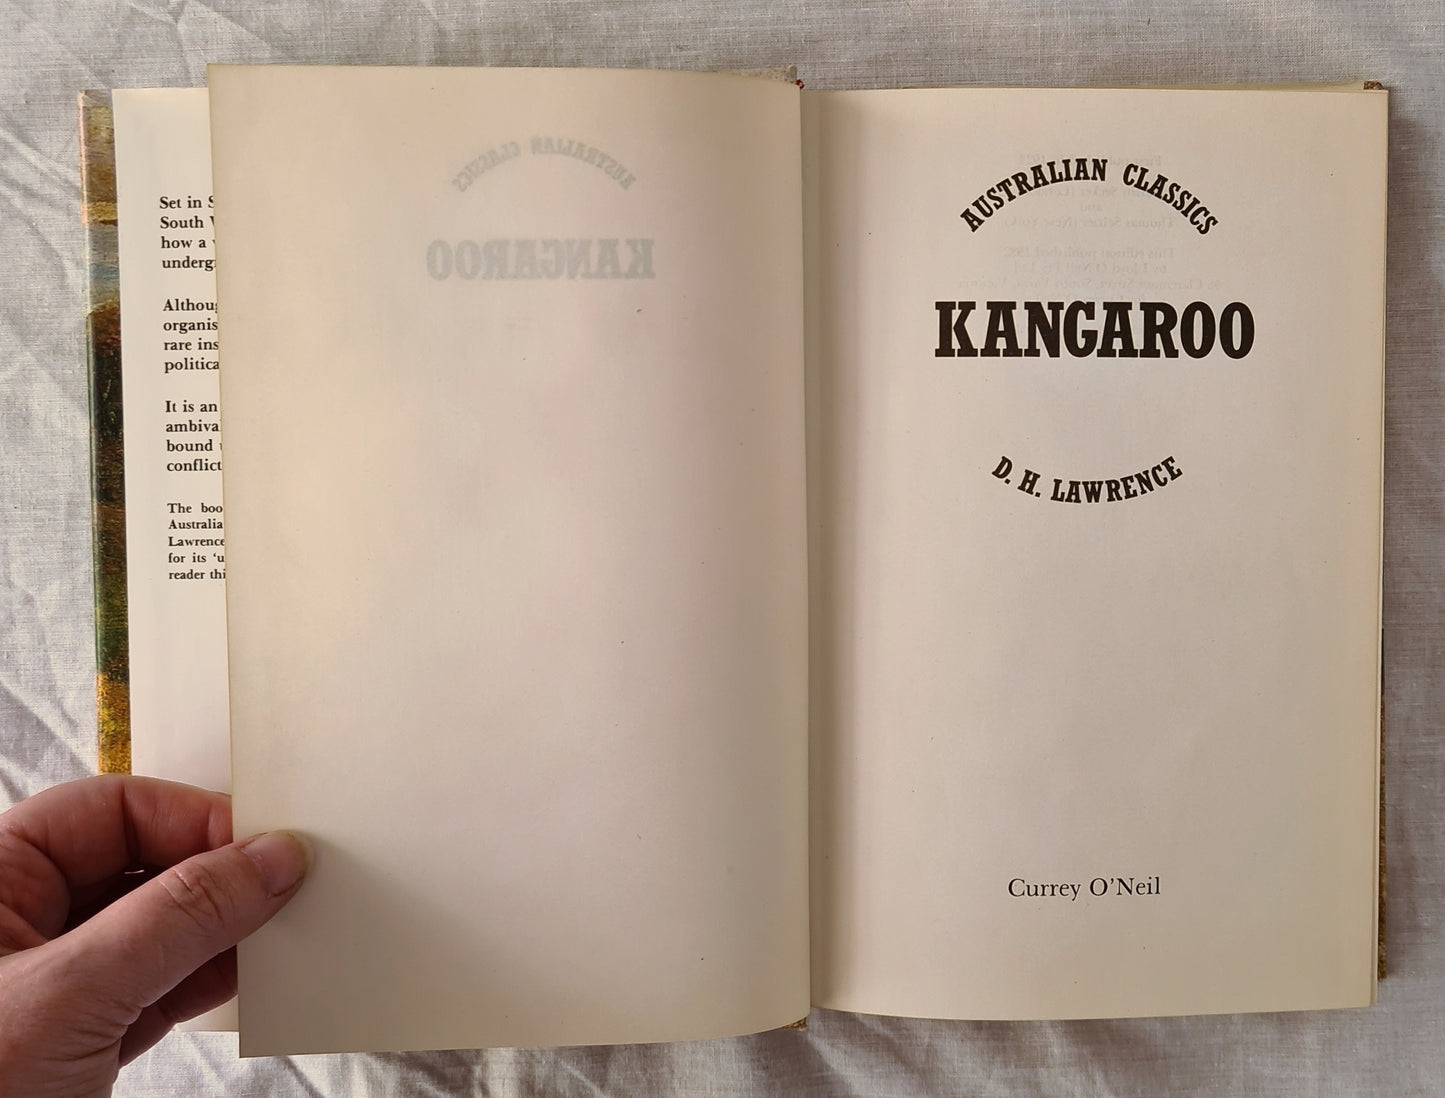 Kangaroo by D. H. Lawrence